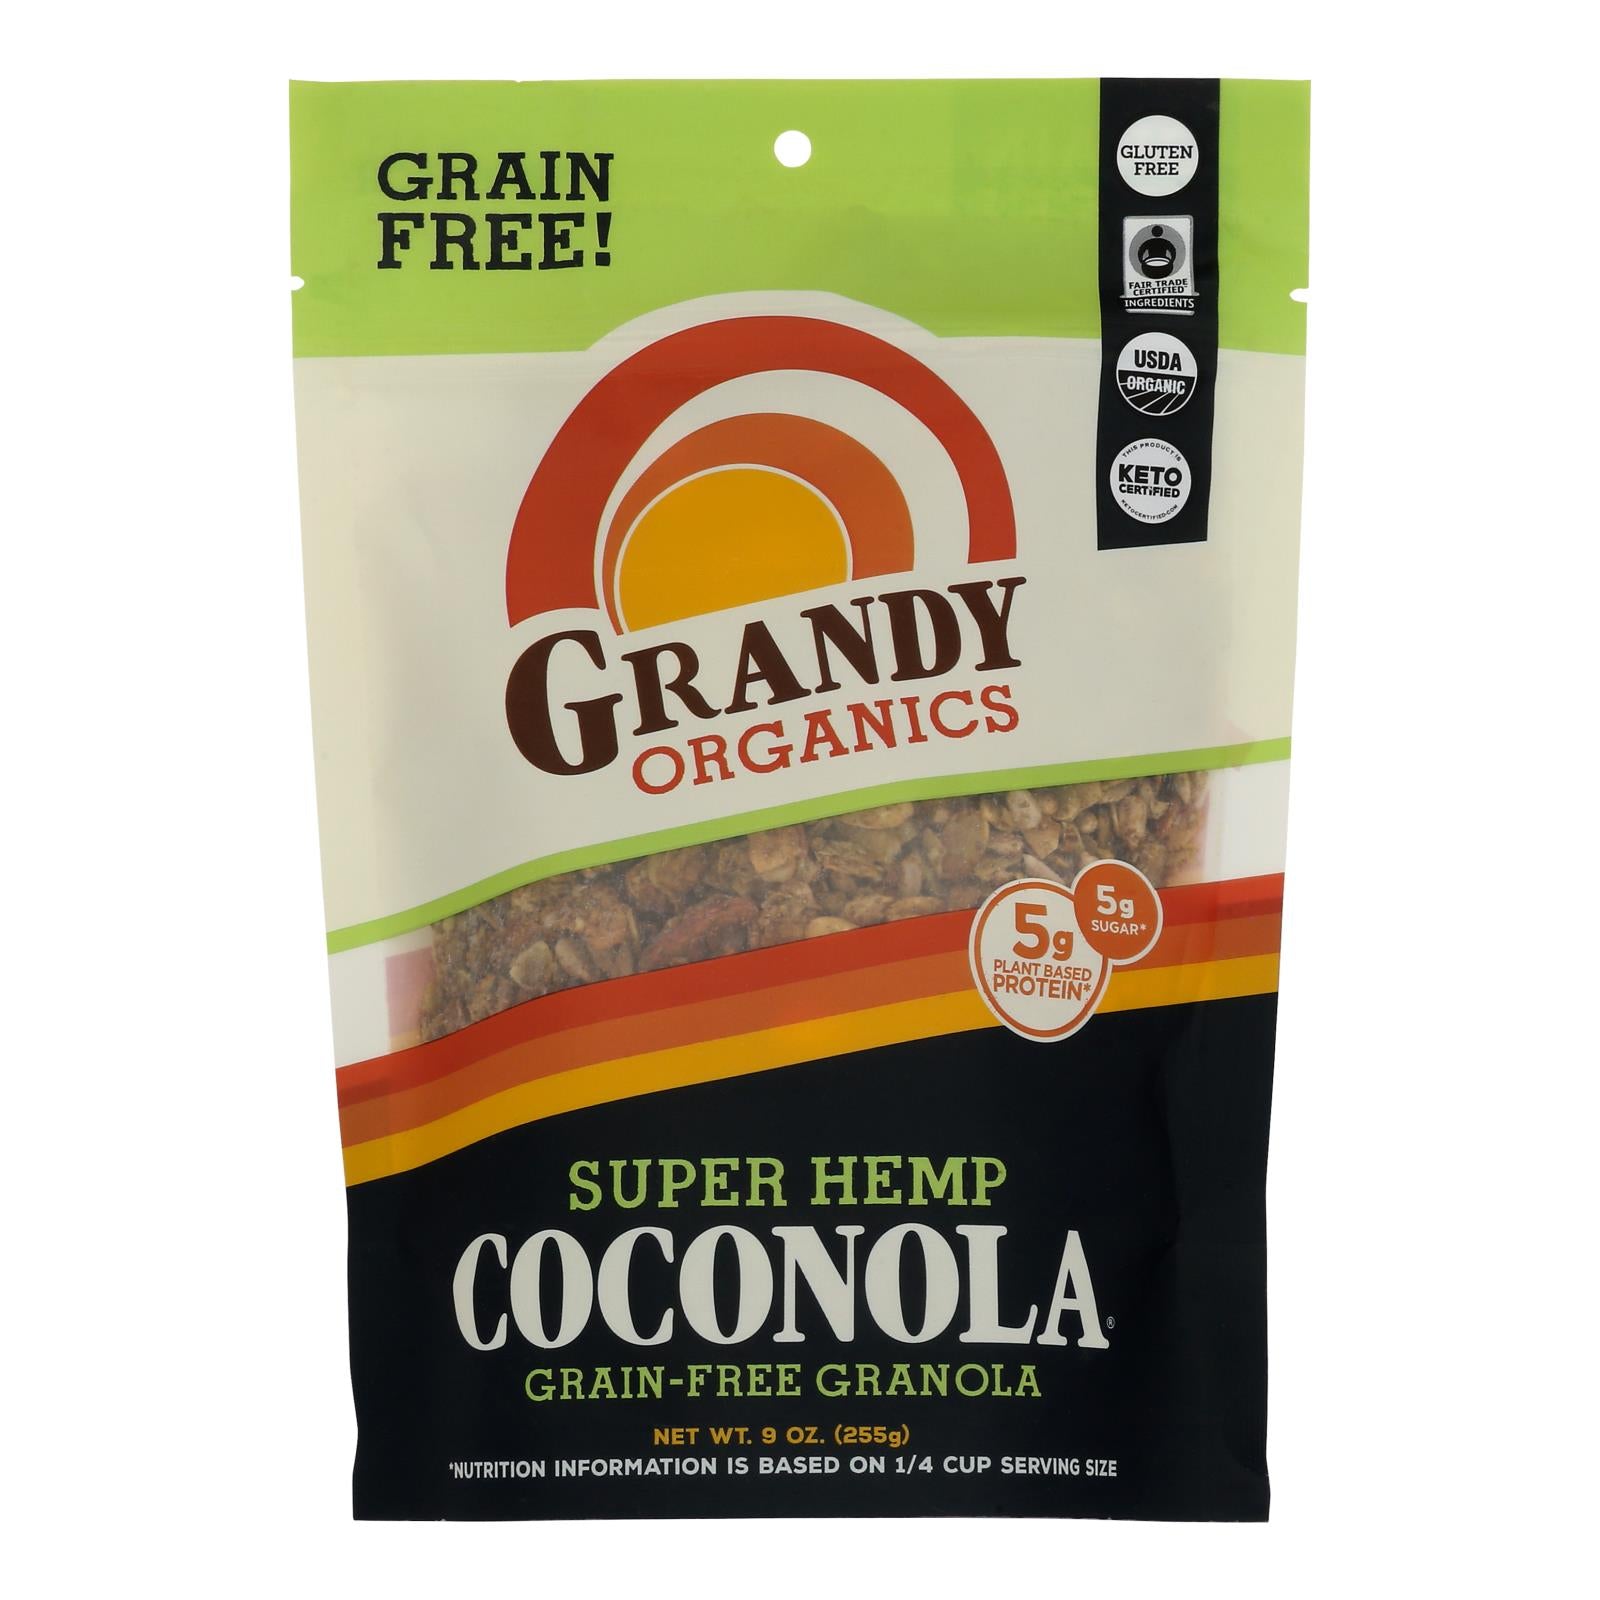 Grandy Oats Organic Granola - Super Hemp Blend Coconola - Case Of 6 - 9 Oz